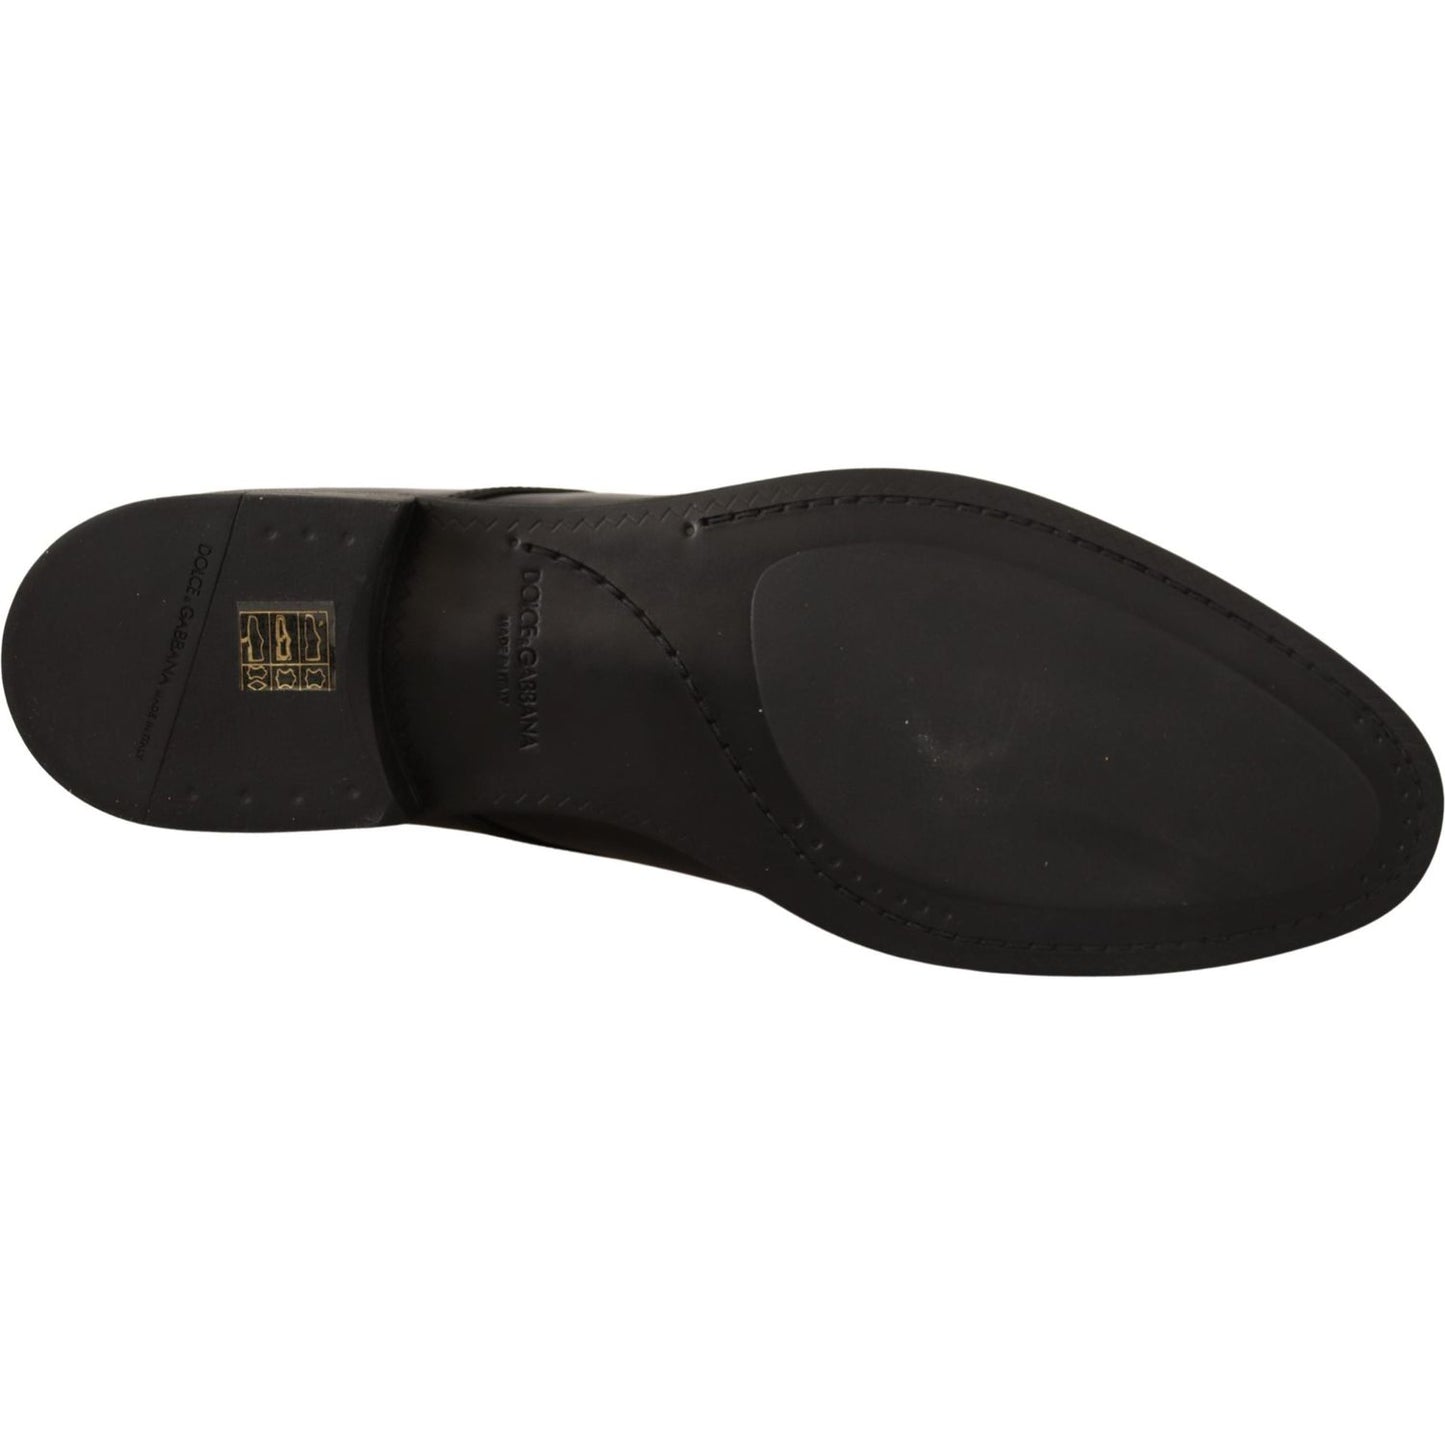 Dolce & Gabbana Elegant Black Leather Derby Shoes black-leather-lace-up-men-dress-derby-shoes-2 Dress Shoes IMG_3705-scaled-1f0adddb-5e0.jpg